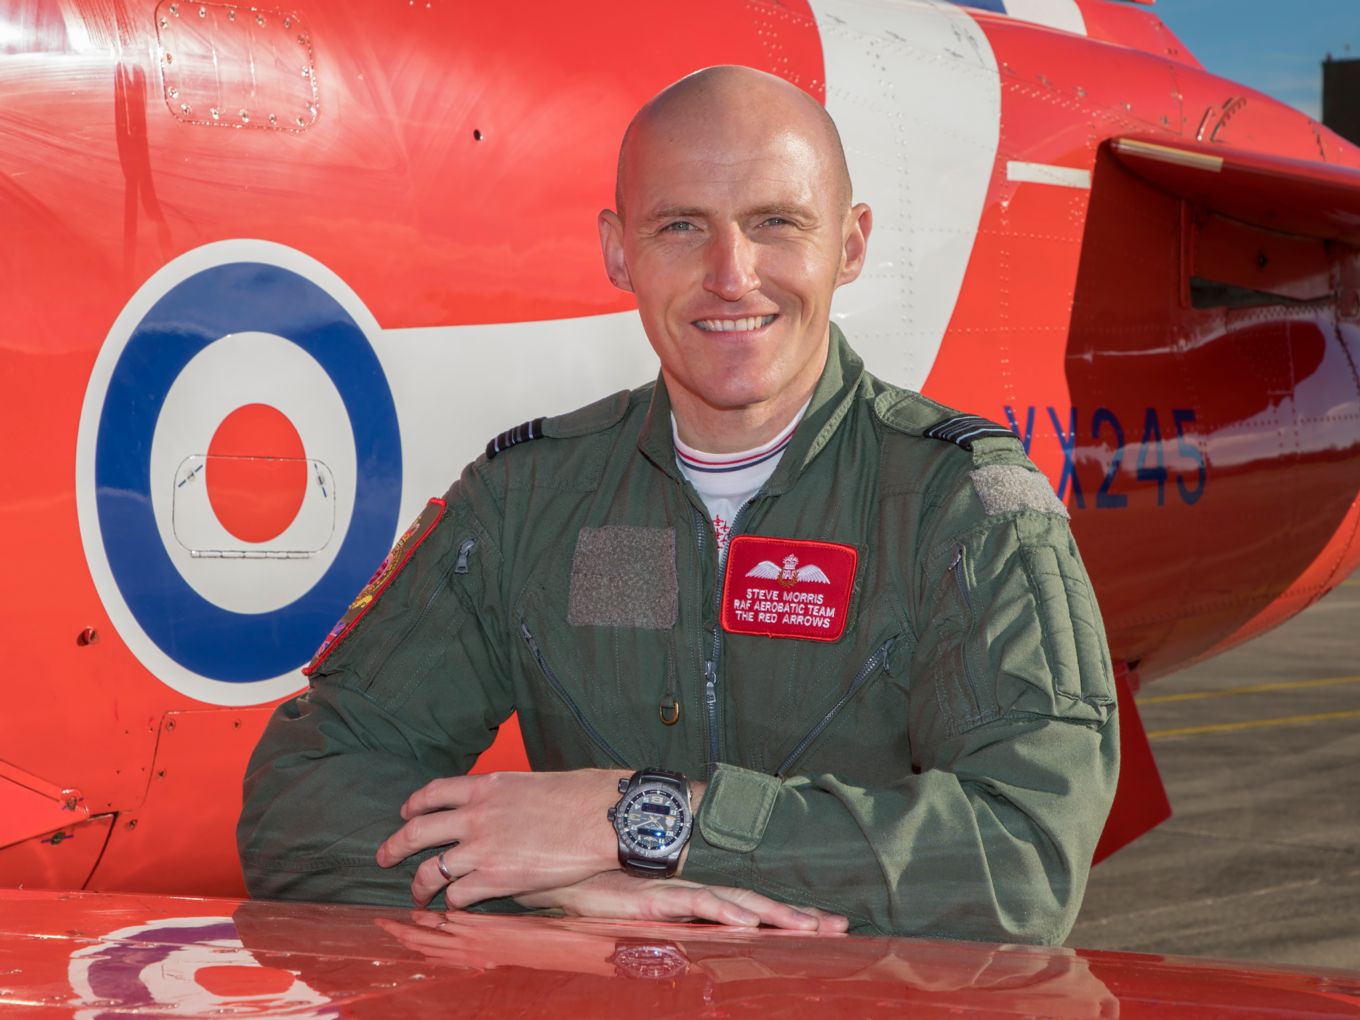 Squadron Leader Steve Morris - Red 5 in 2019